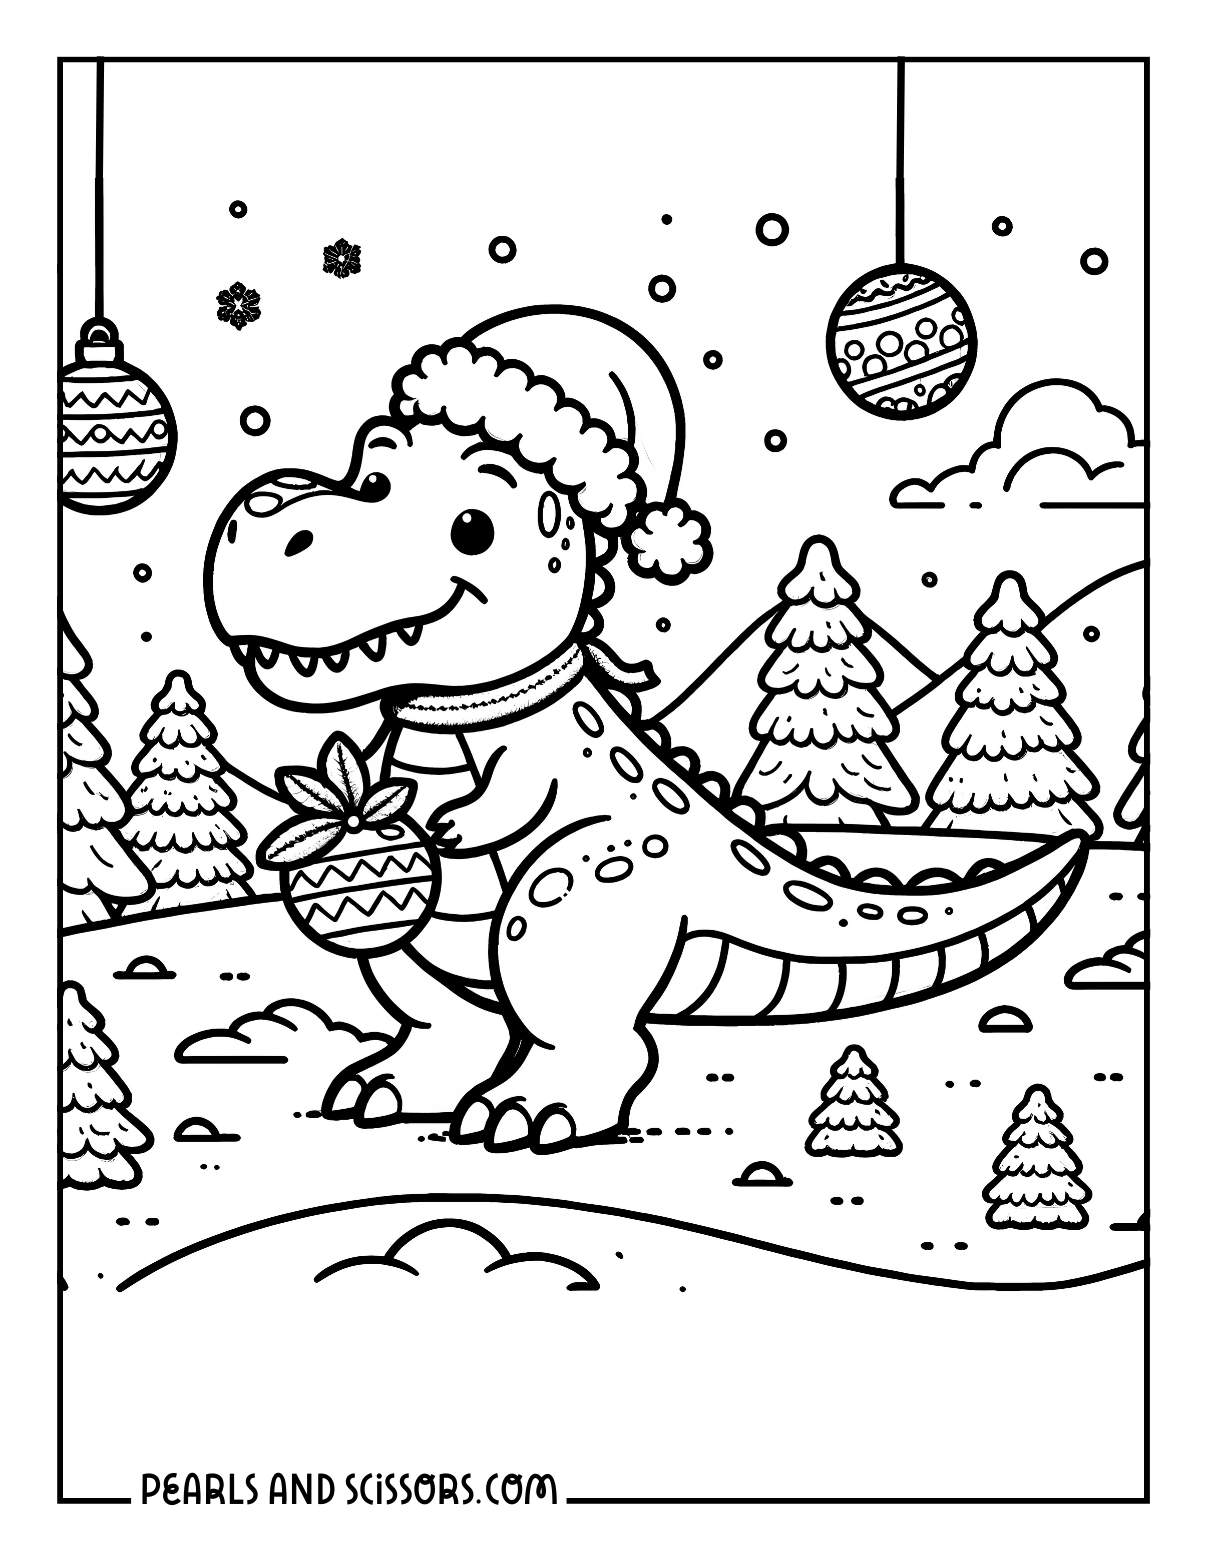 T-rex wearing a santa hat decorating christmas trees coloring sheet.